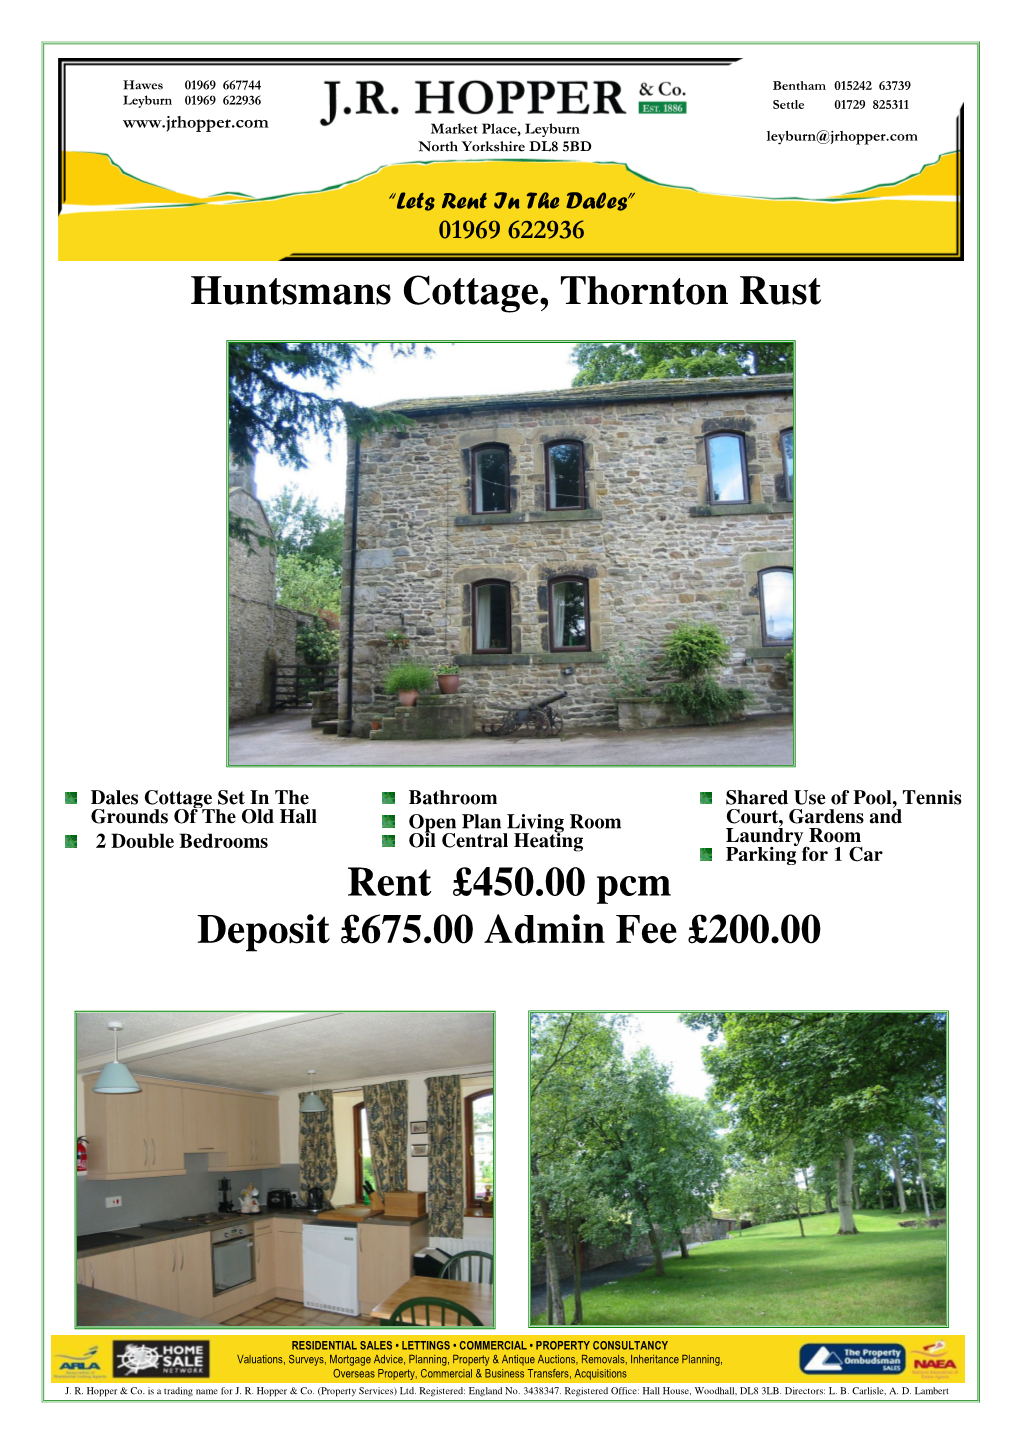 Huntsmans Cottage, Thornton Rust, Aysgarth